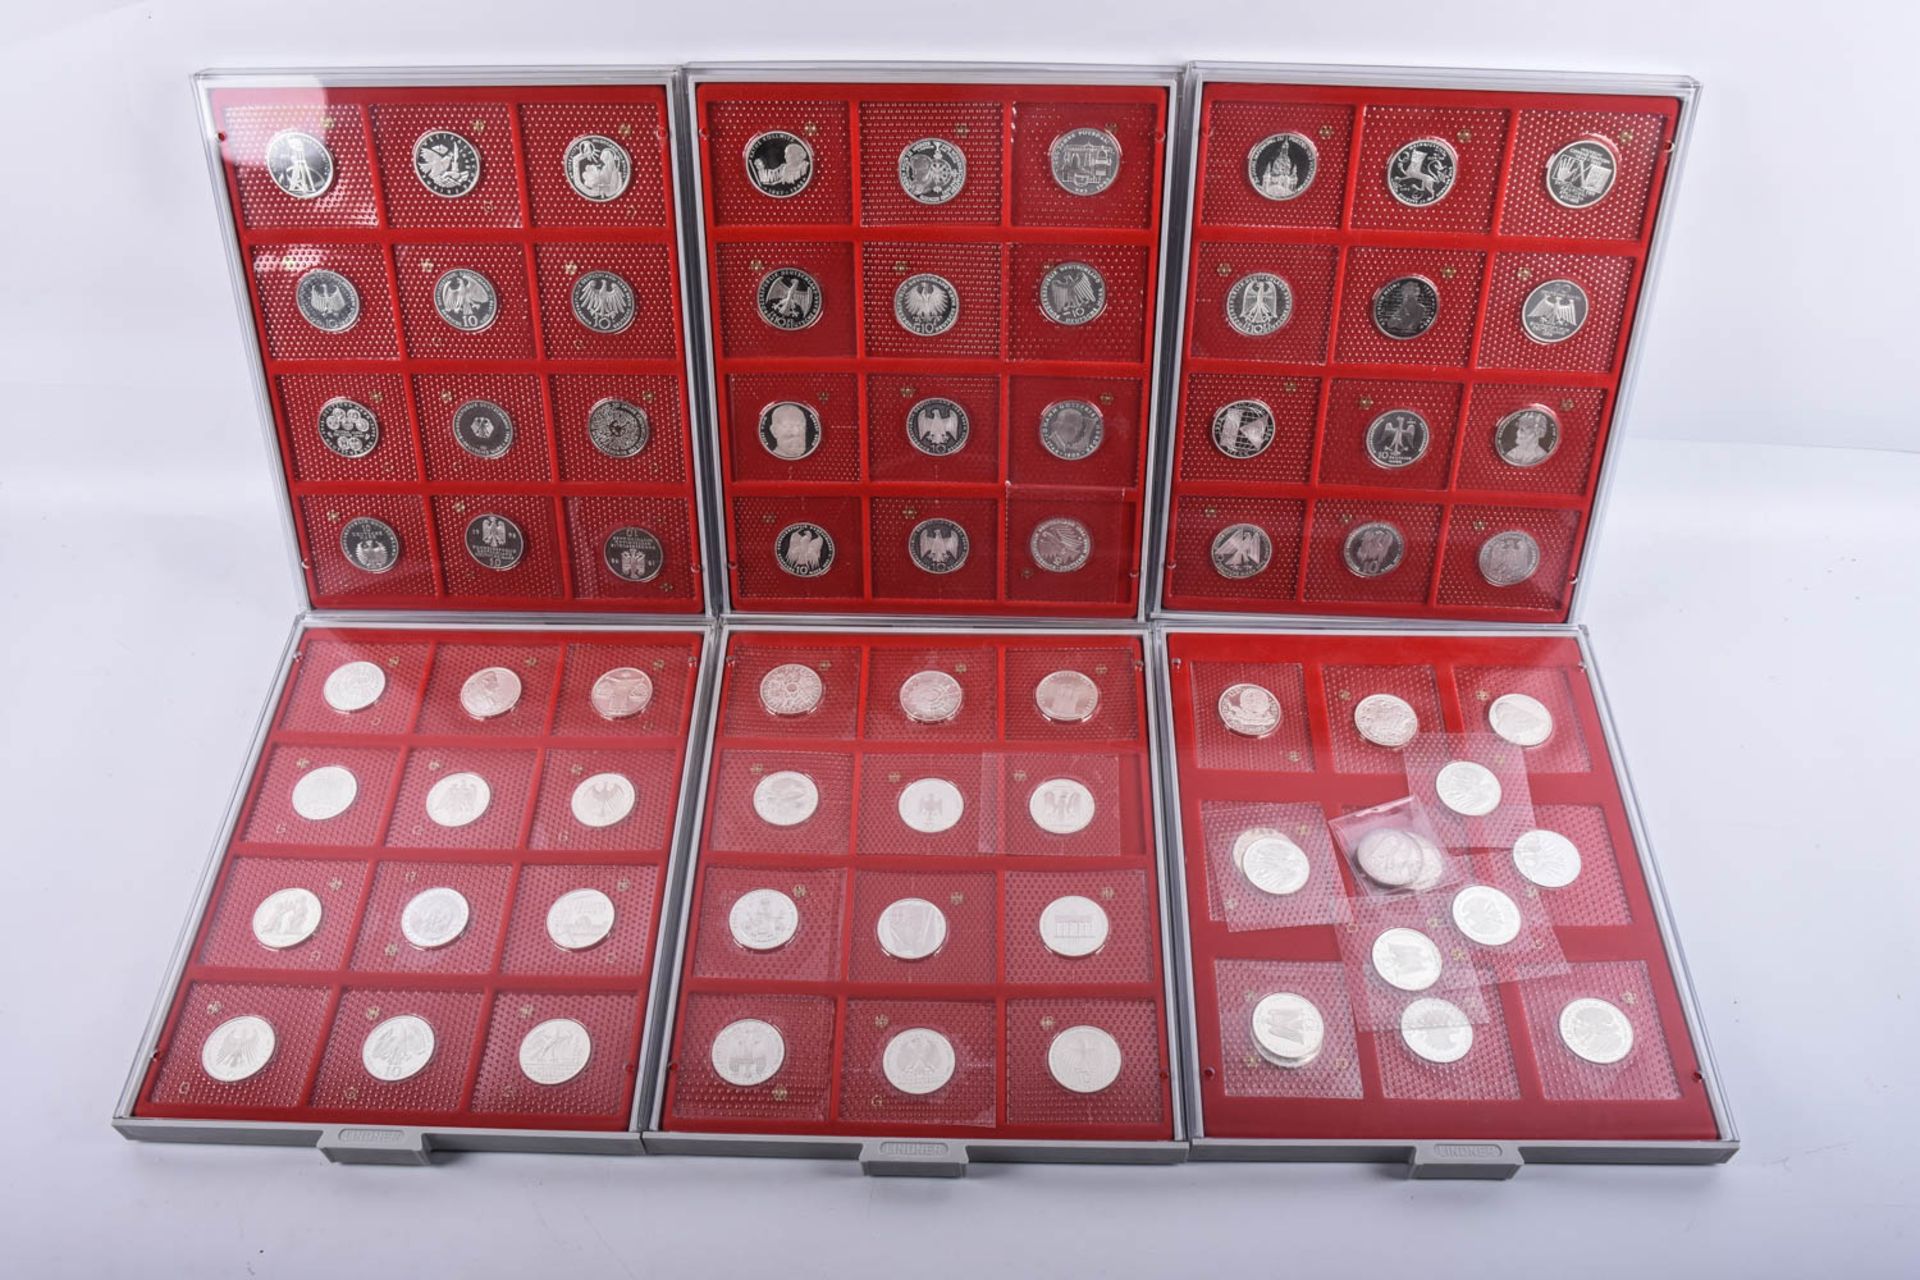 10 DM Konvolut aus 75 Silbermünzen, PP 1987 bis 200, komplett